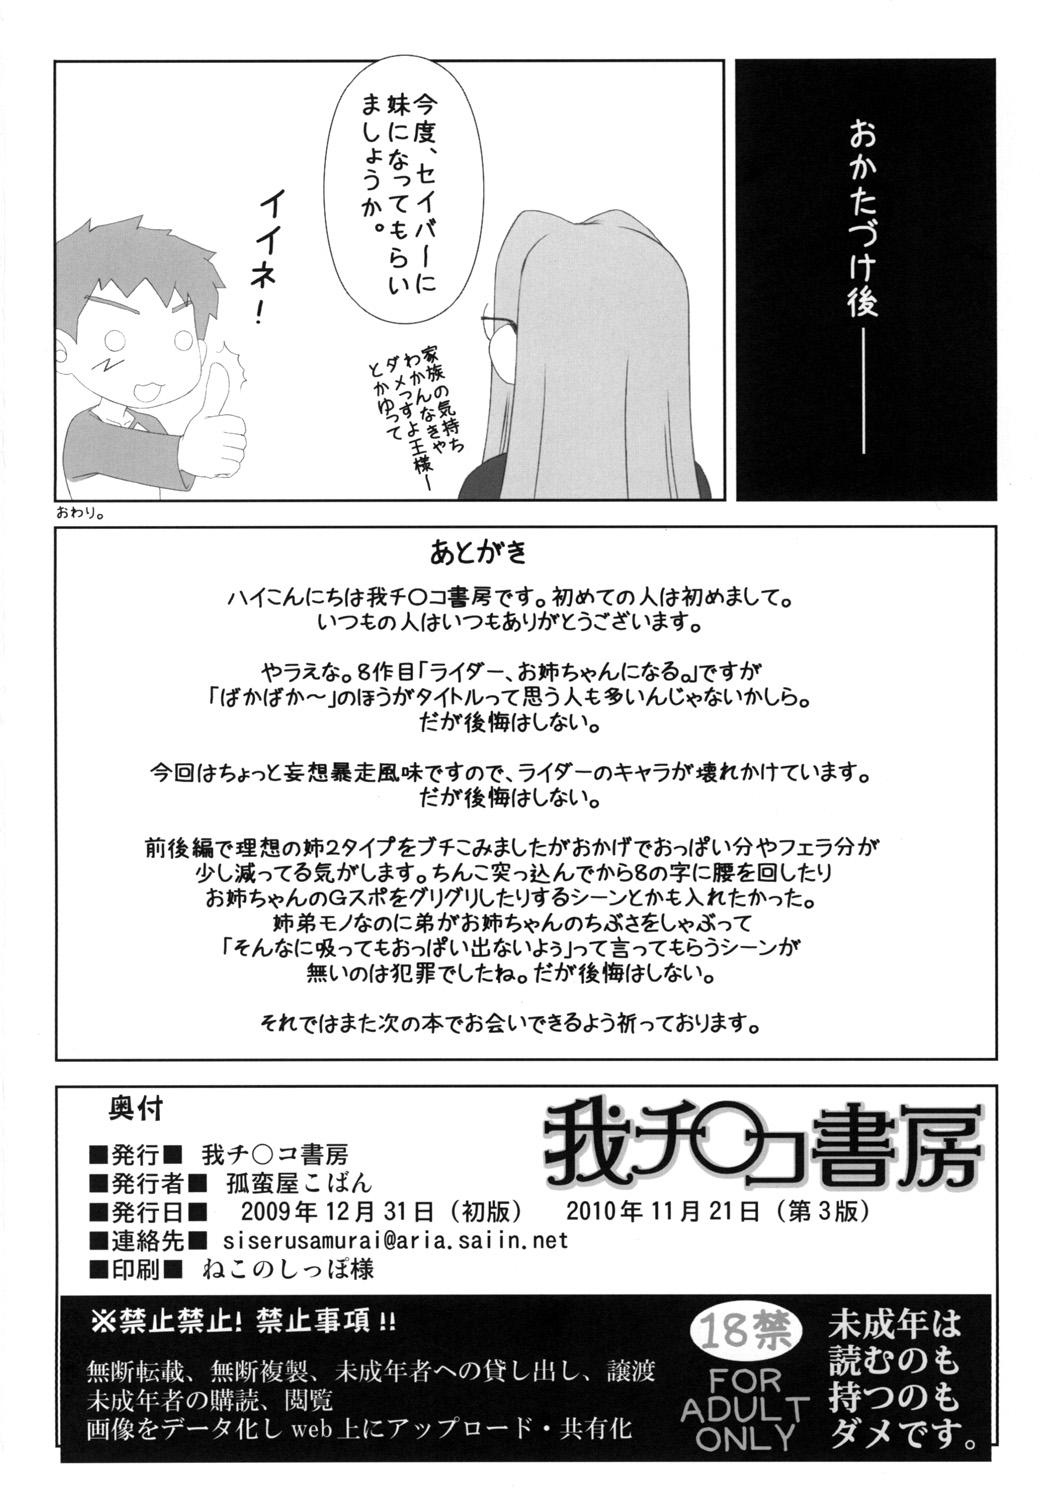 Chupada Yappari Rider wa Eroi na 8 "Rider, Oneechan ni naru" - Fate stay night Publico - Page 33